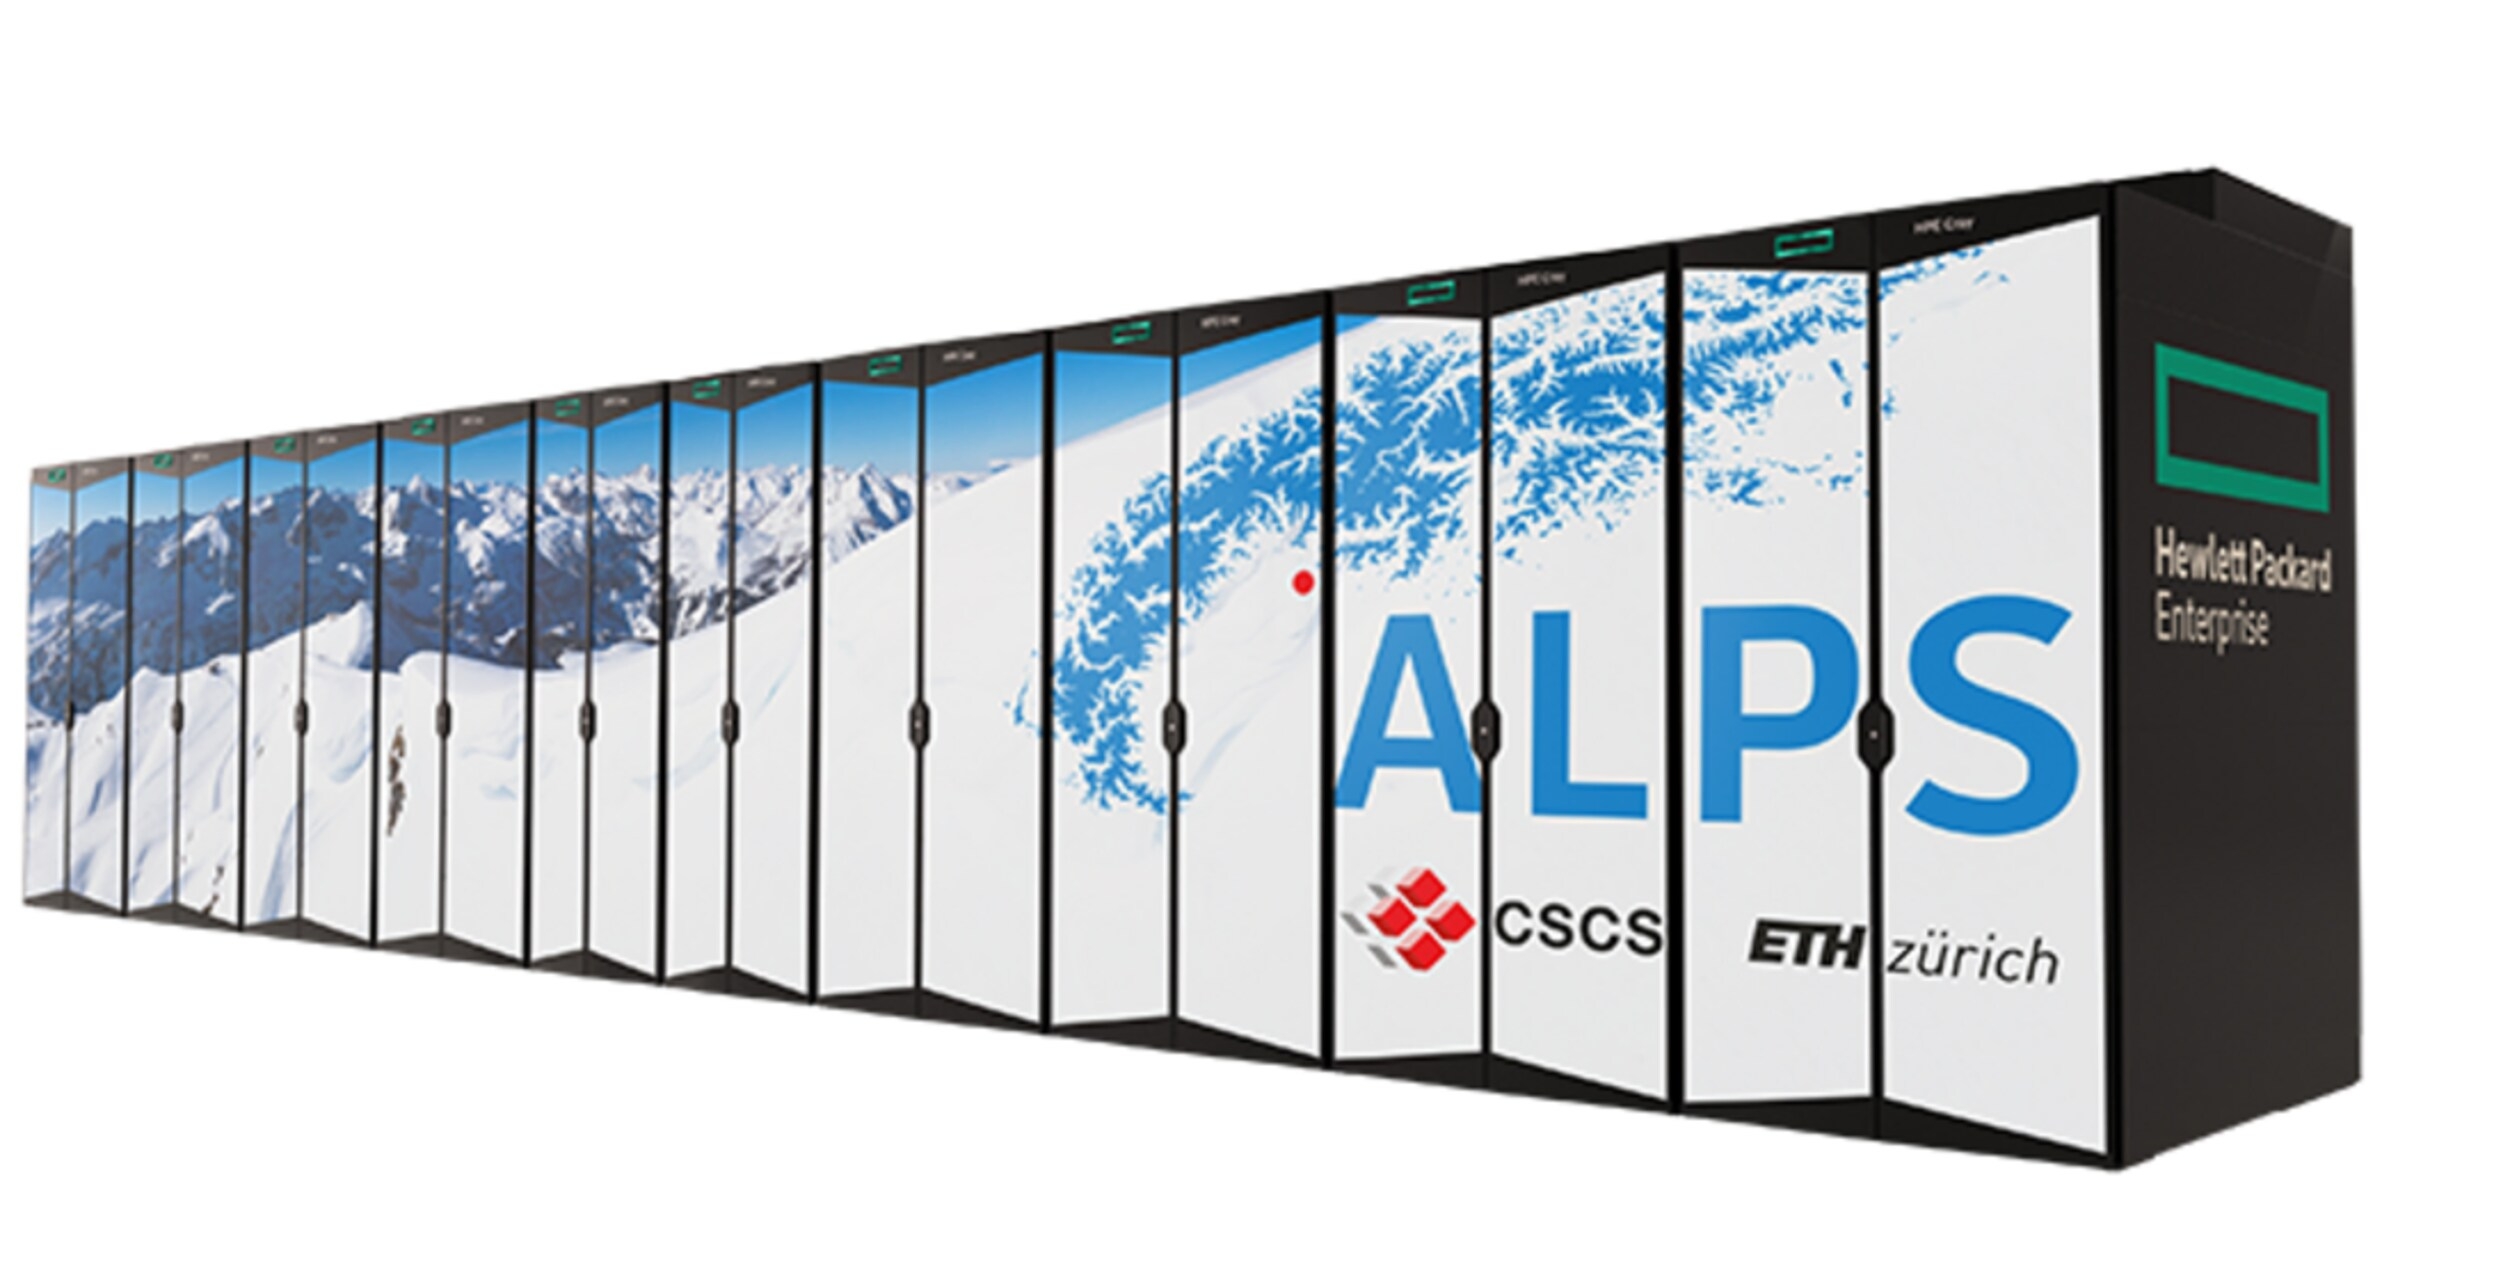 AI: Alpský superpočítač Národního superpočítačového centra (CSCS) v Luganu